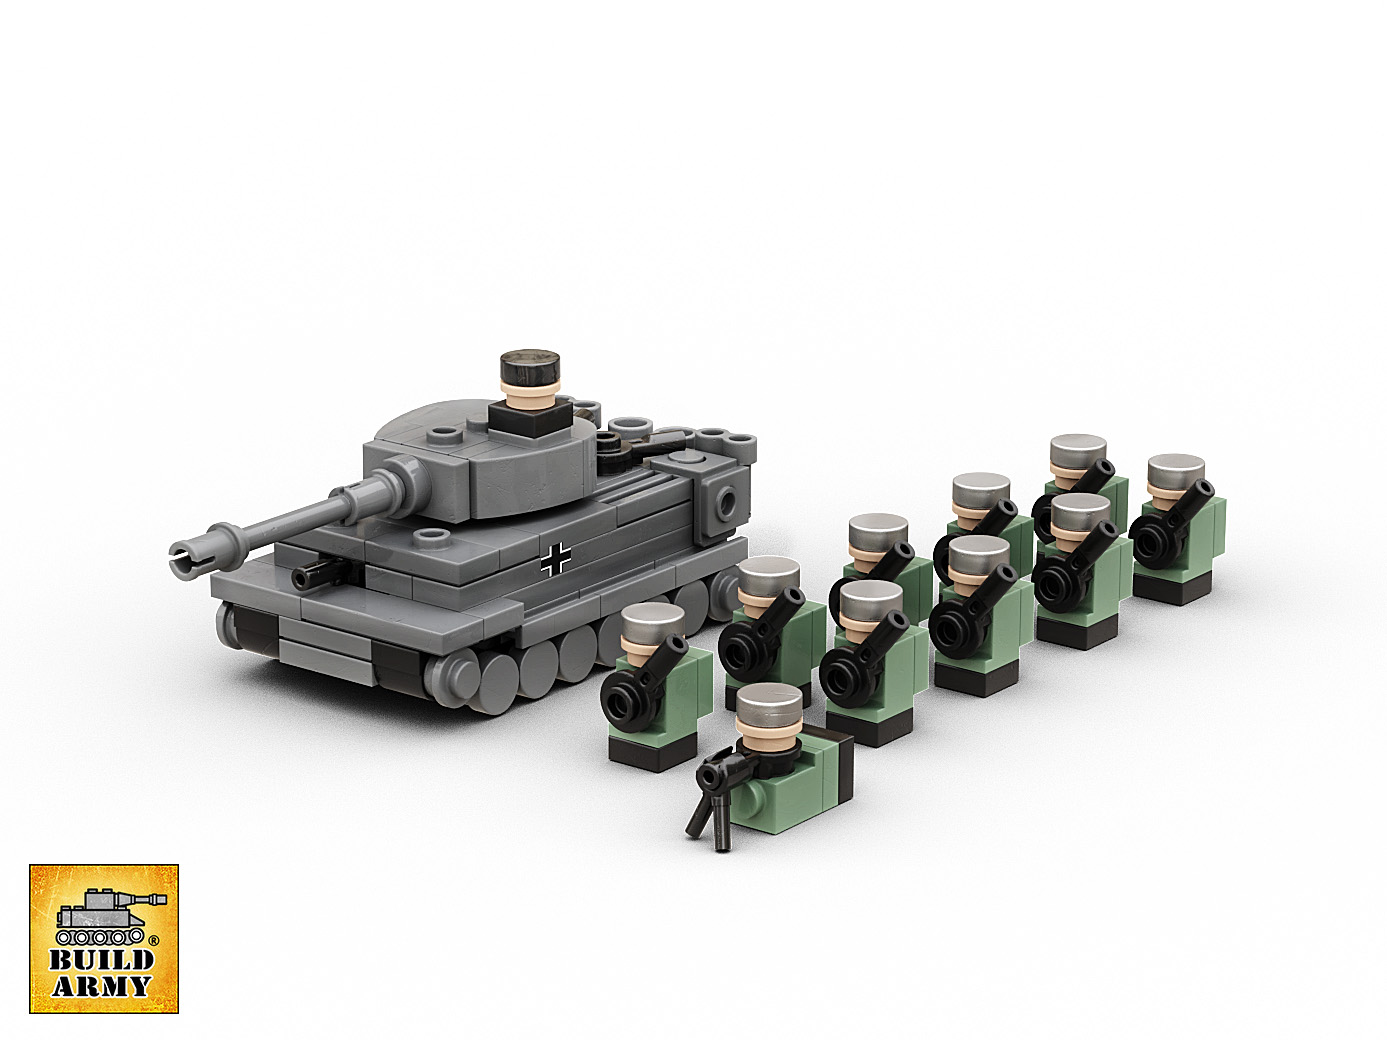 LEGO MOC [Micro Tank Fighter] Tiger i by balmiteblock